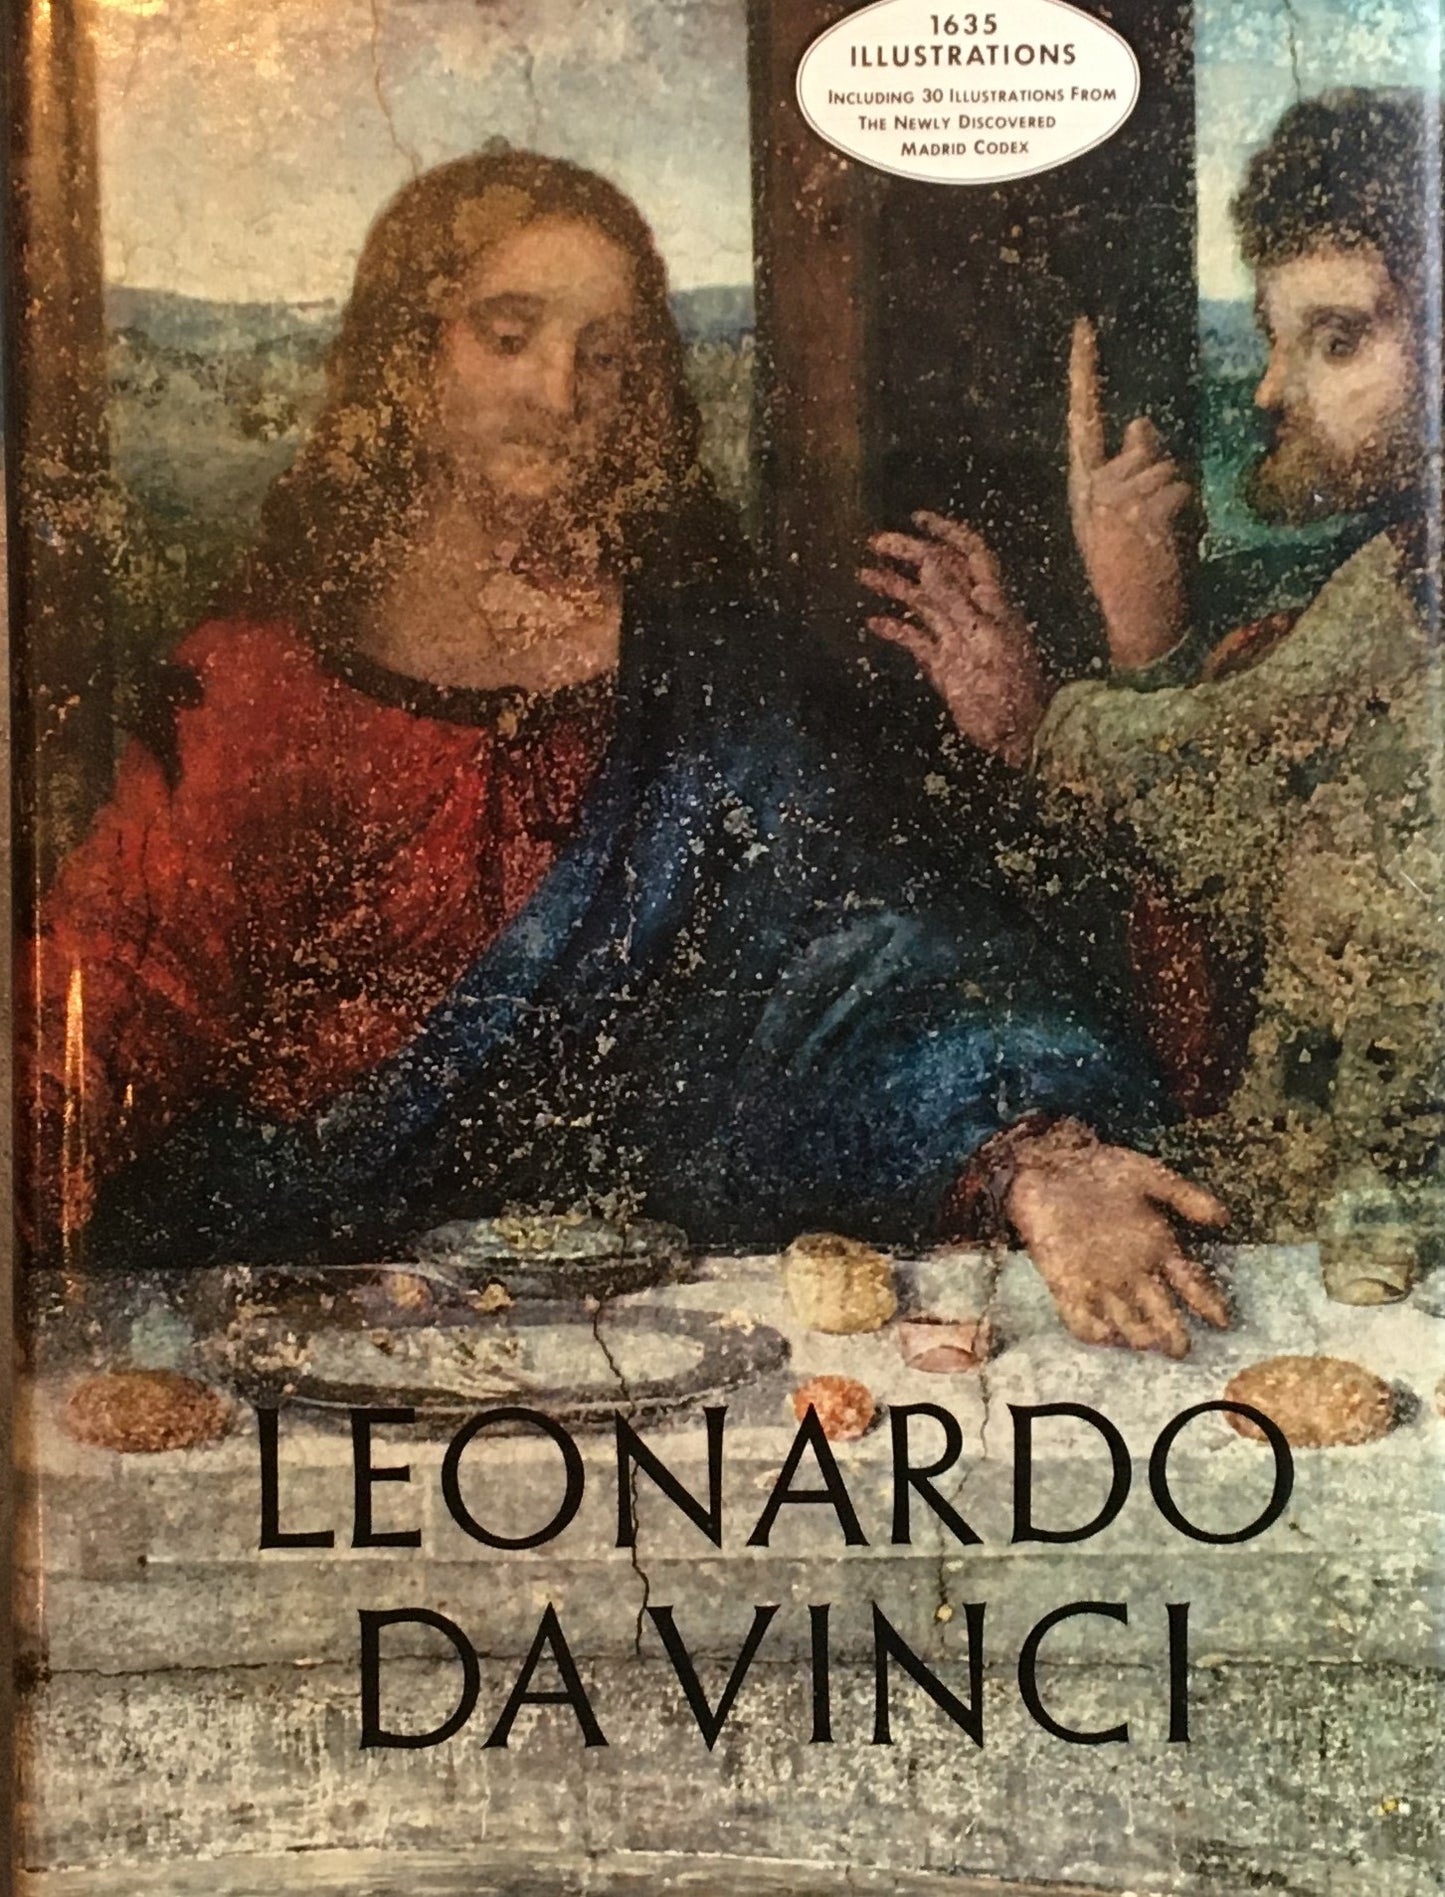 LEONARDO DA VINCI  AN ARTABRAS BOOK